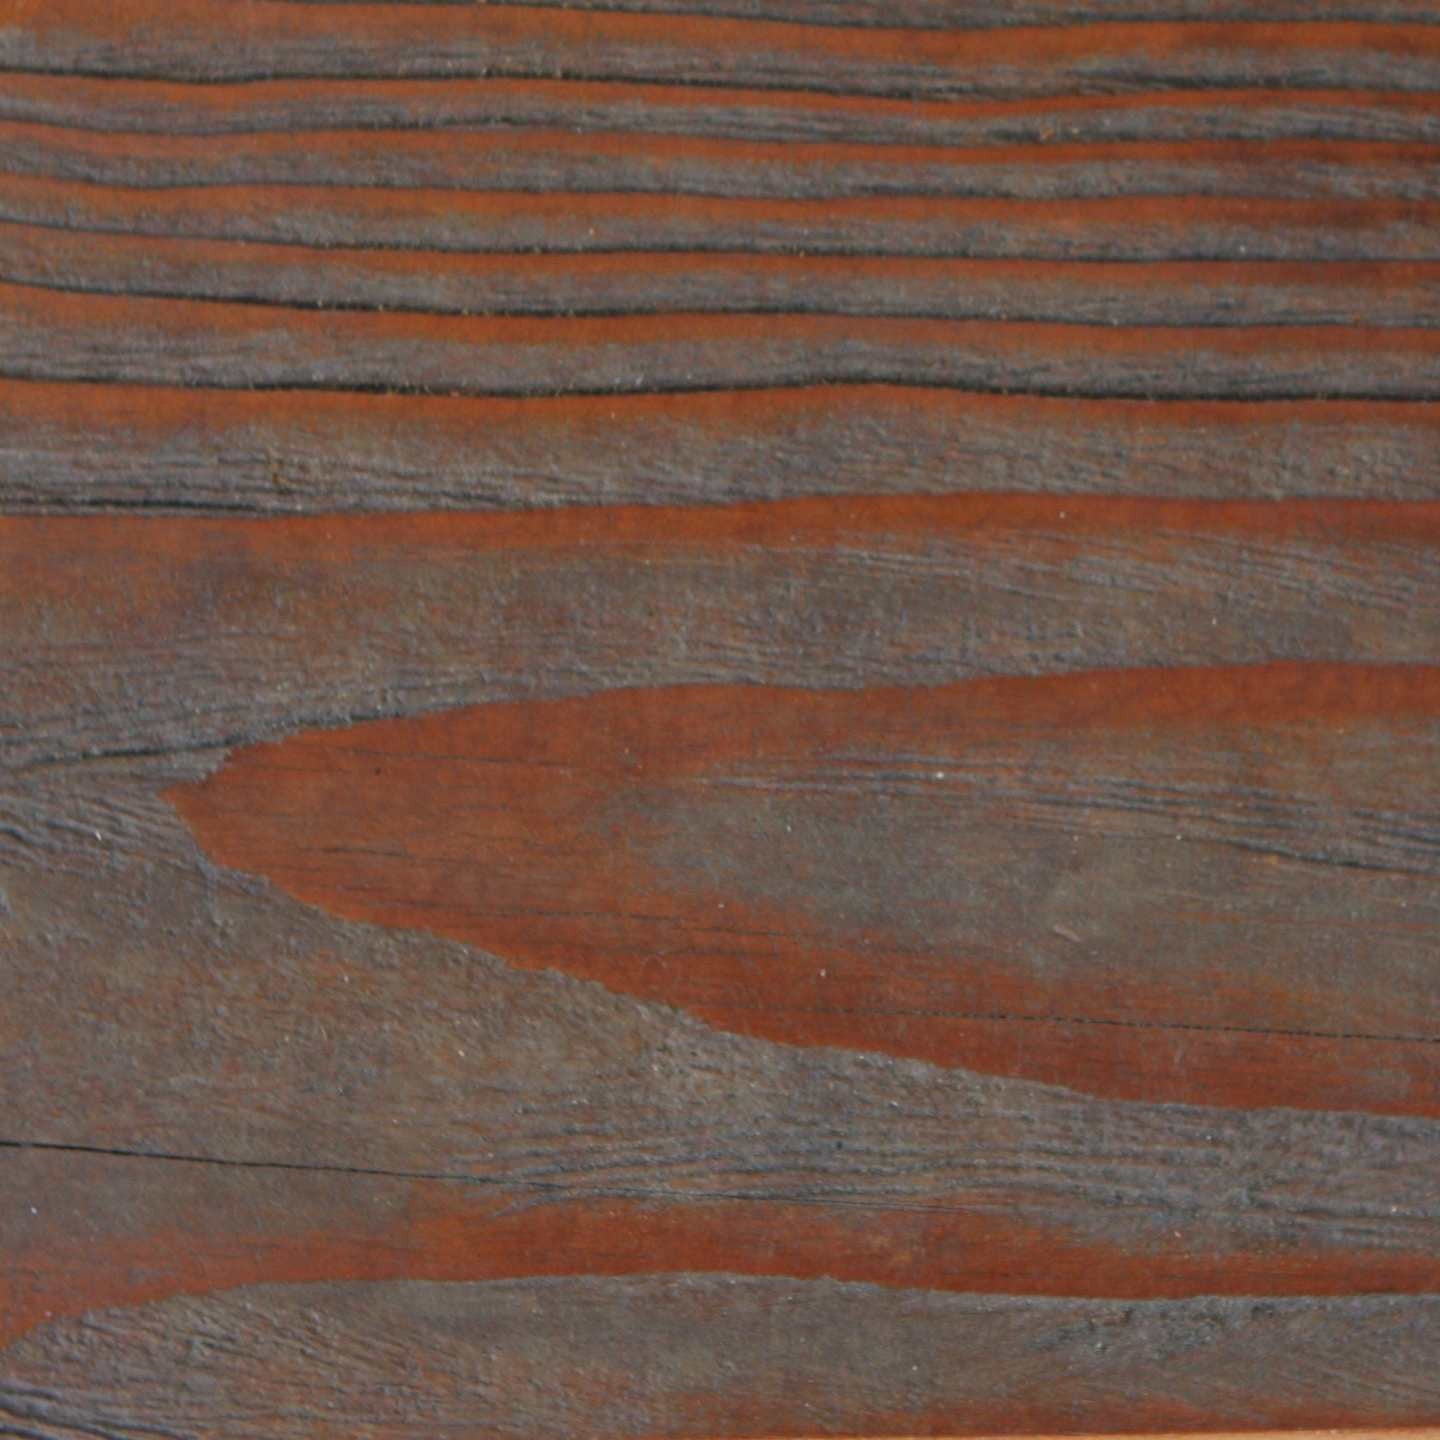 Weathered Black Finish on Reclaimed Wood – Mortise & Tenon